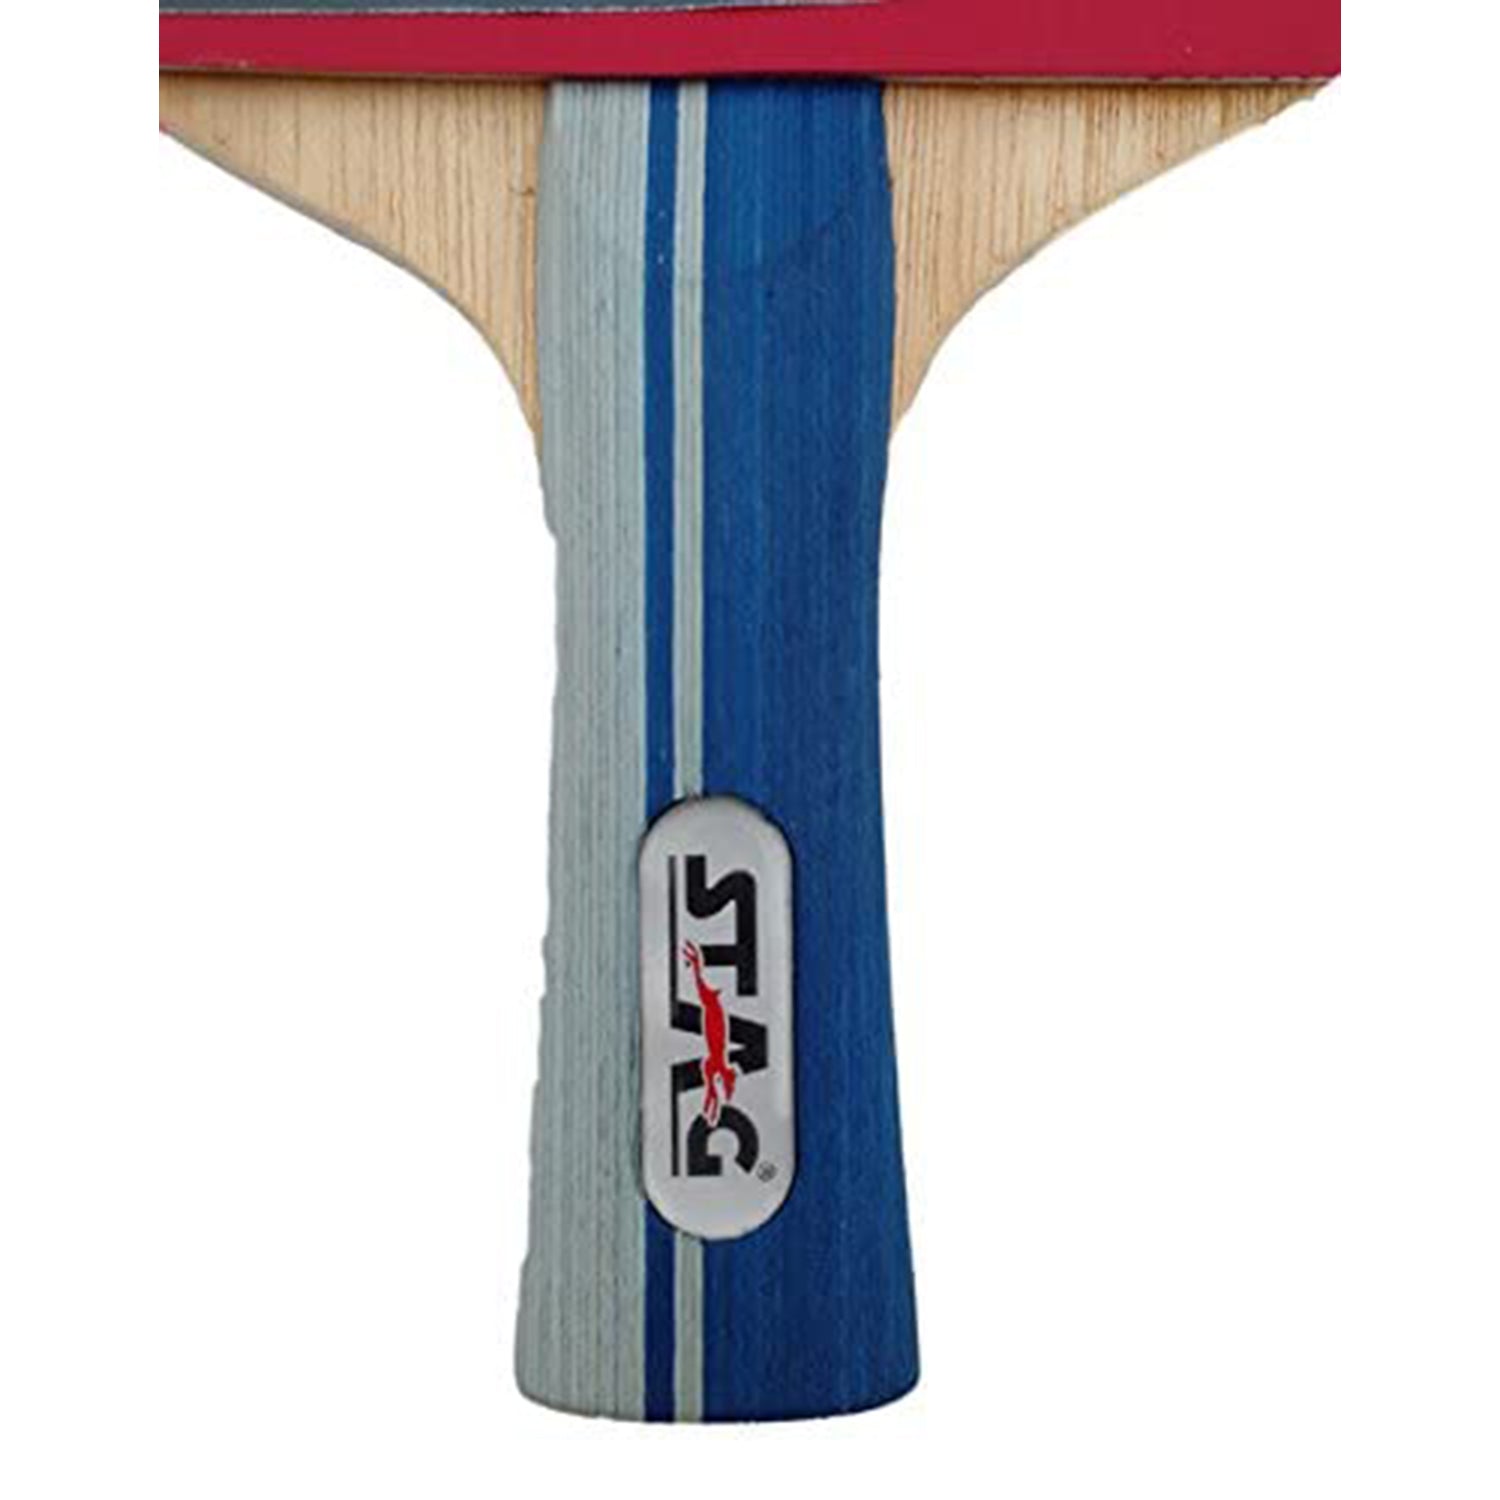 Stag Tournament Table Tennis Racket, Red/Black - Best Price online Prokicksports.com